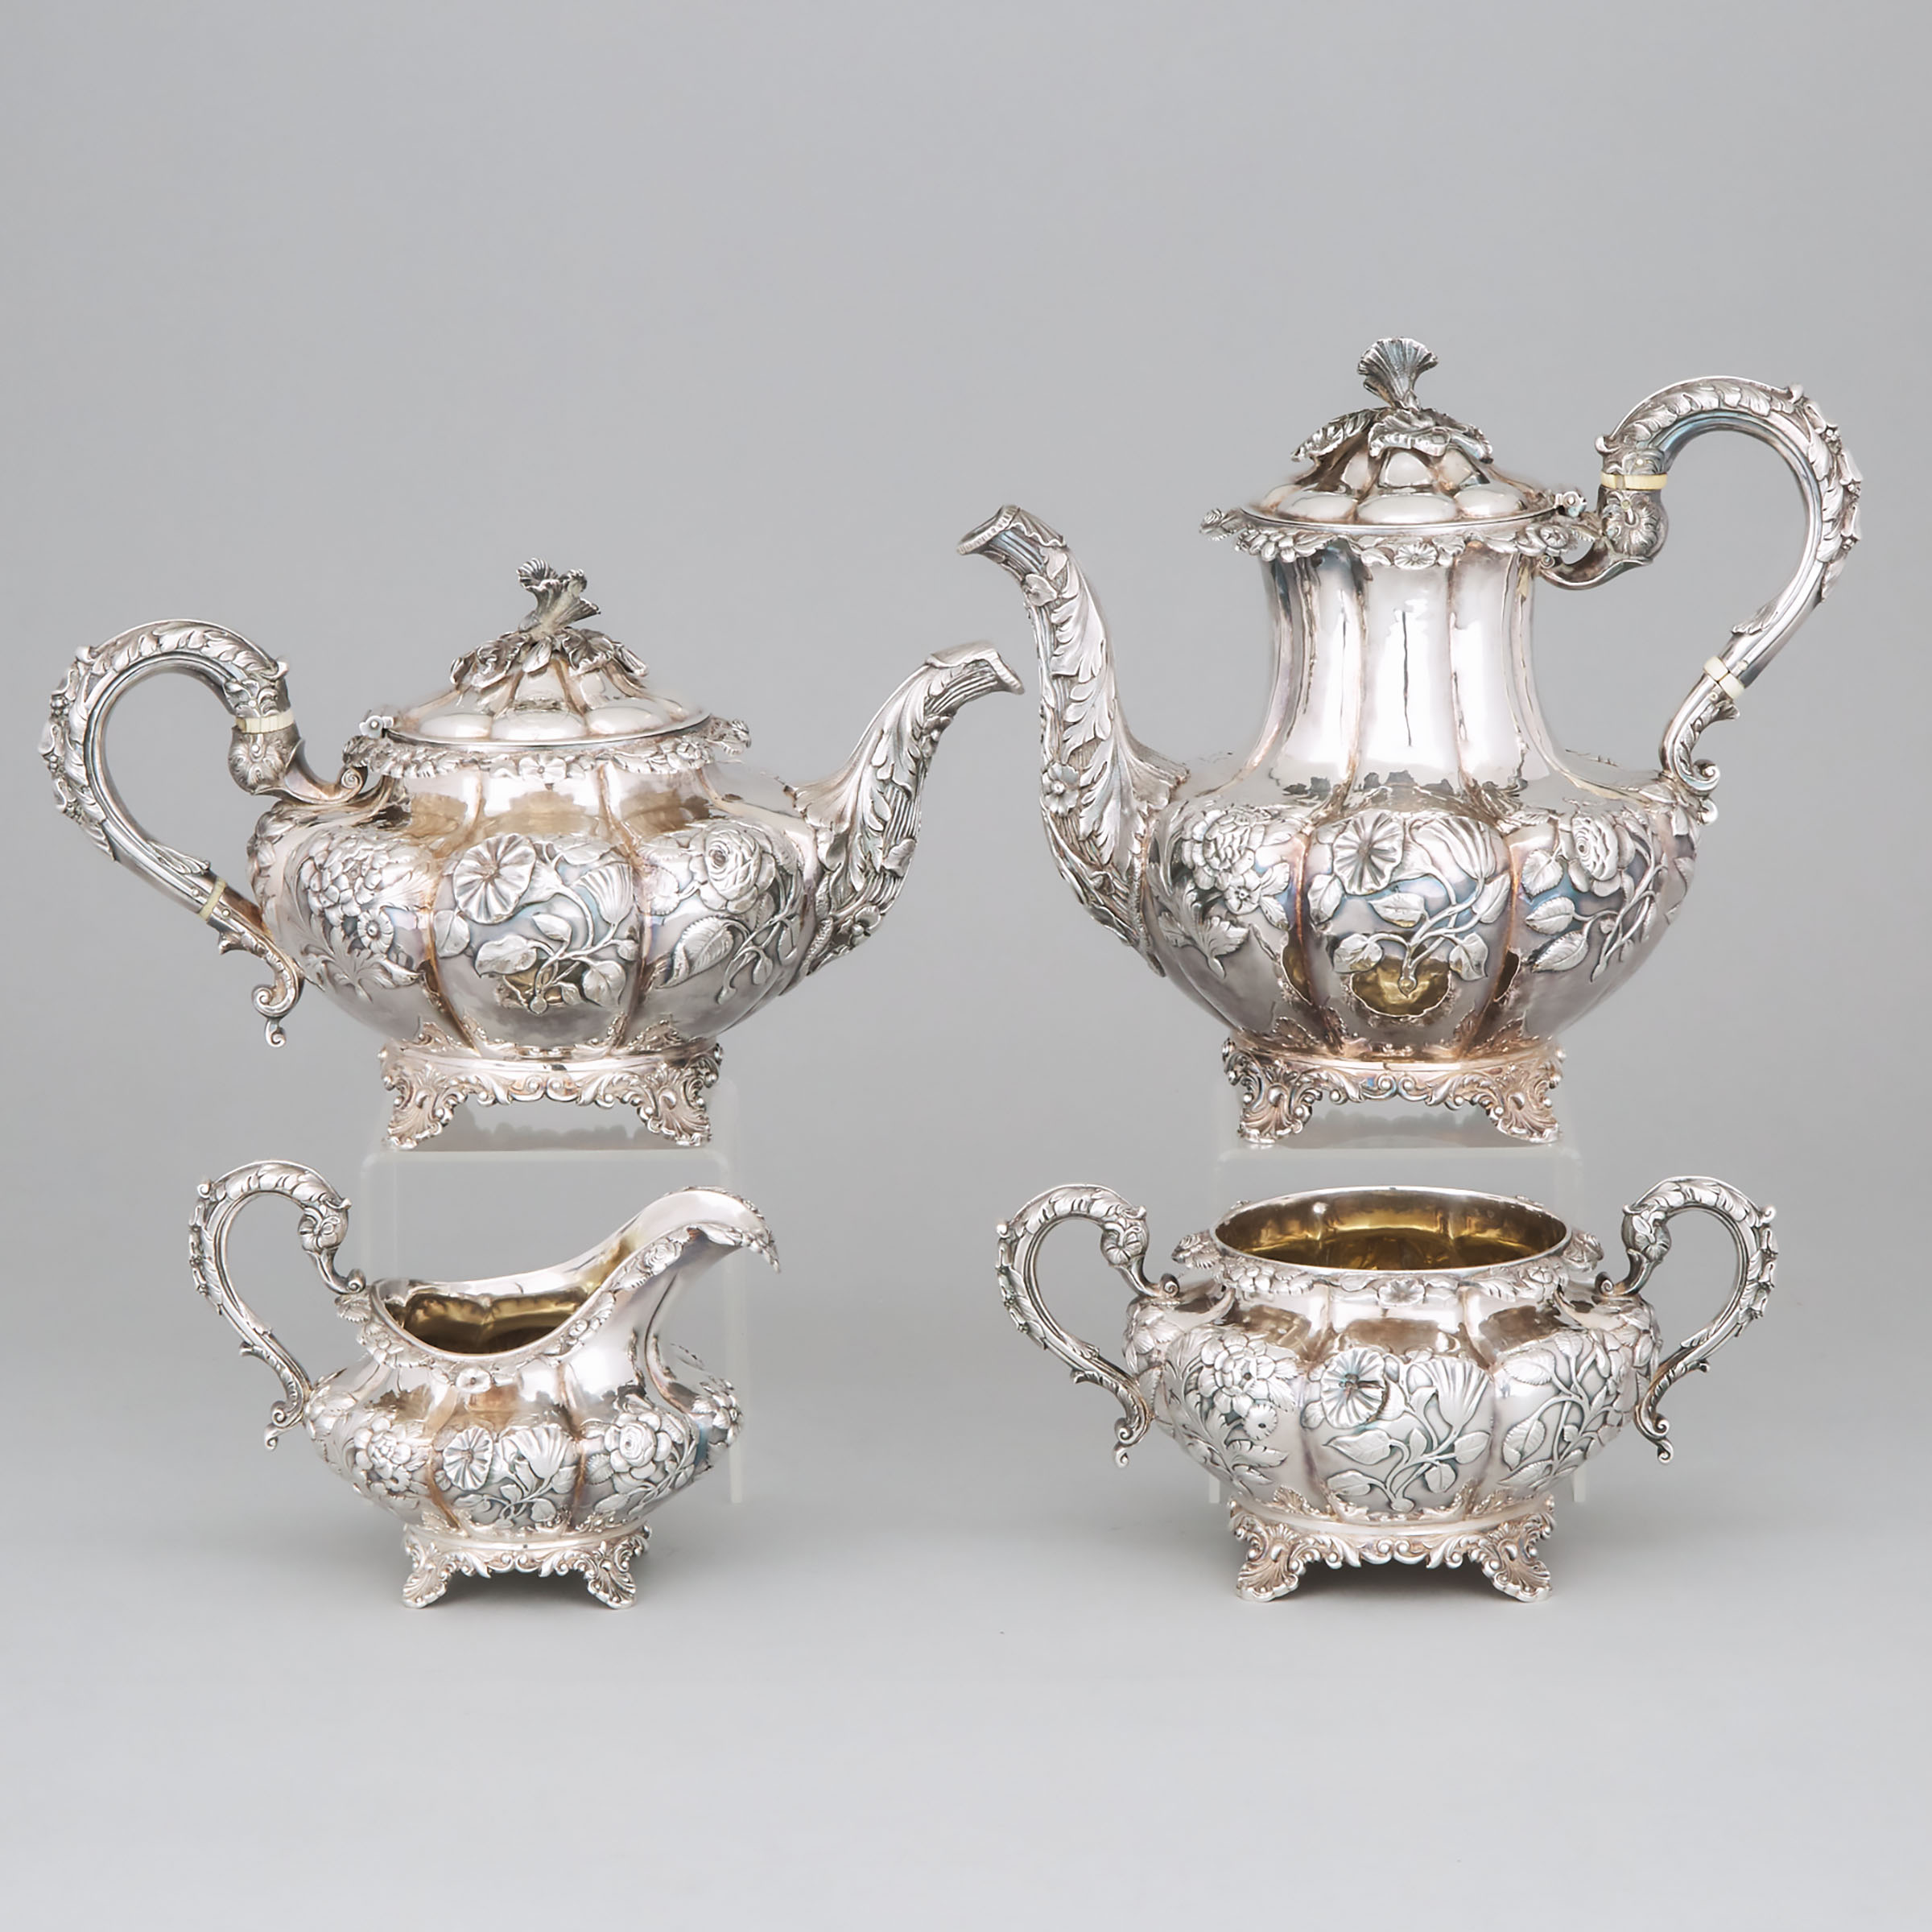 William IV Silver Tea and Coffee Service, Charles Gordon, London, 1830